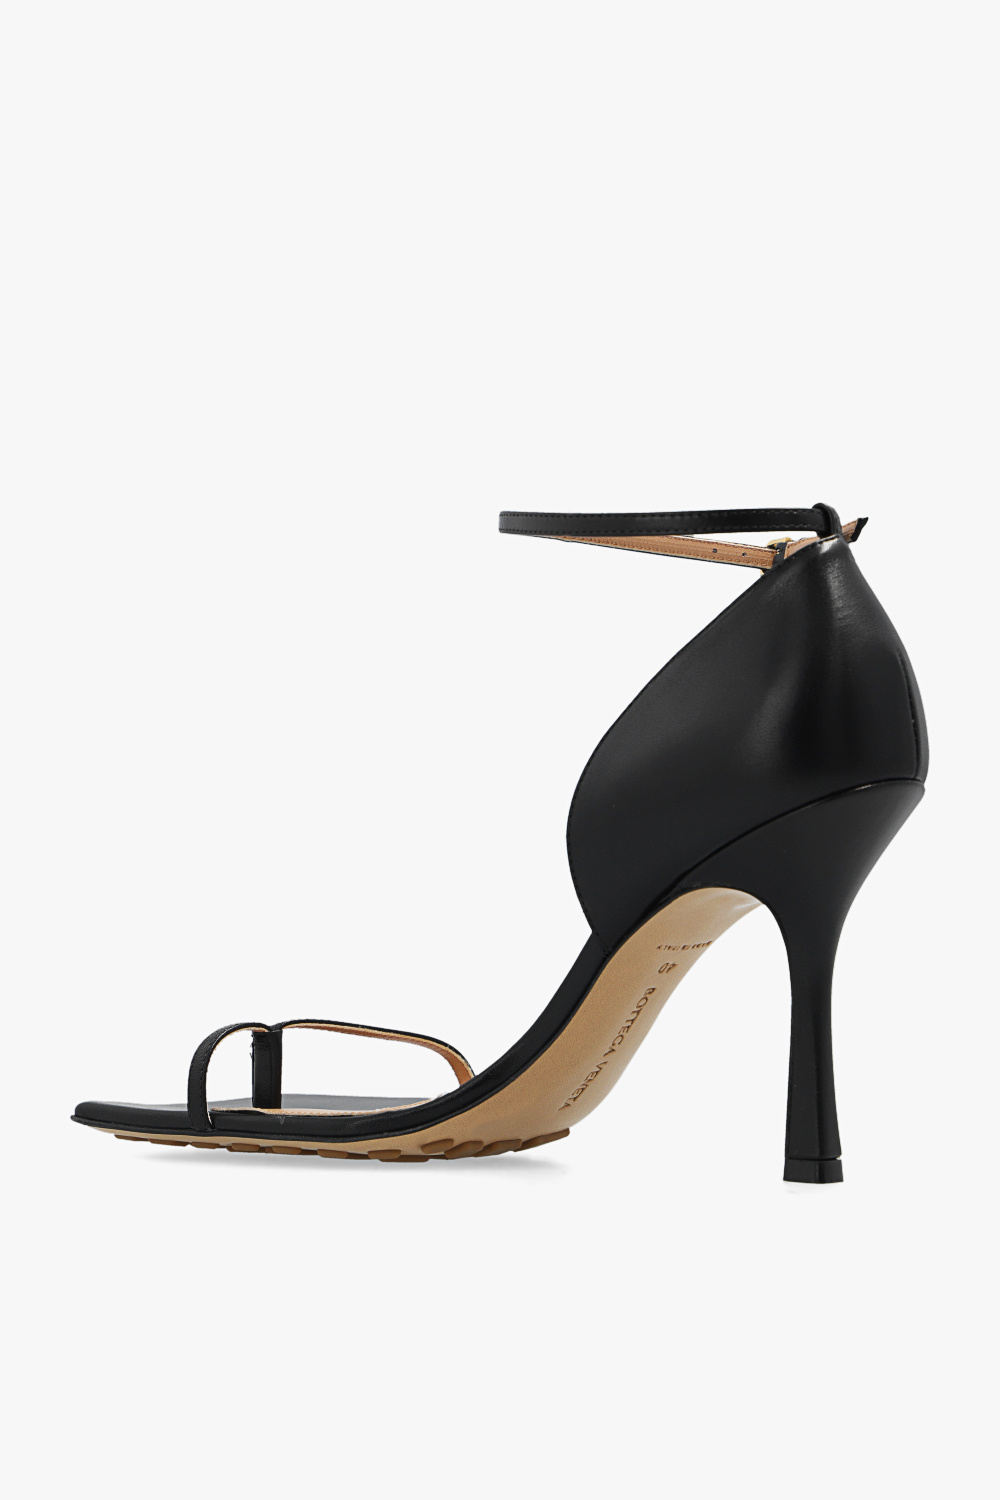 bottega torba Veneta ‘Stretch’ heeled sandals